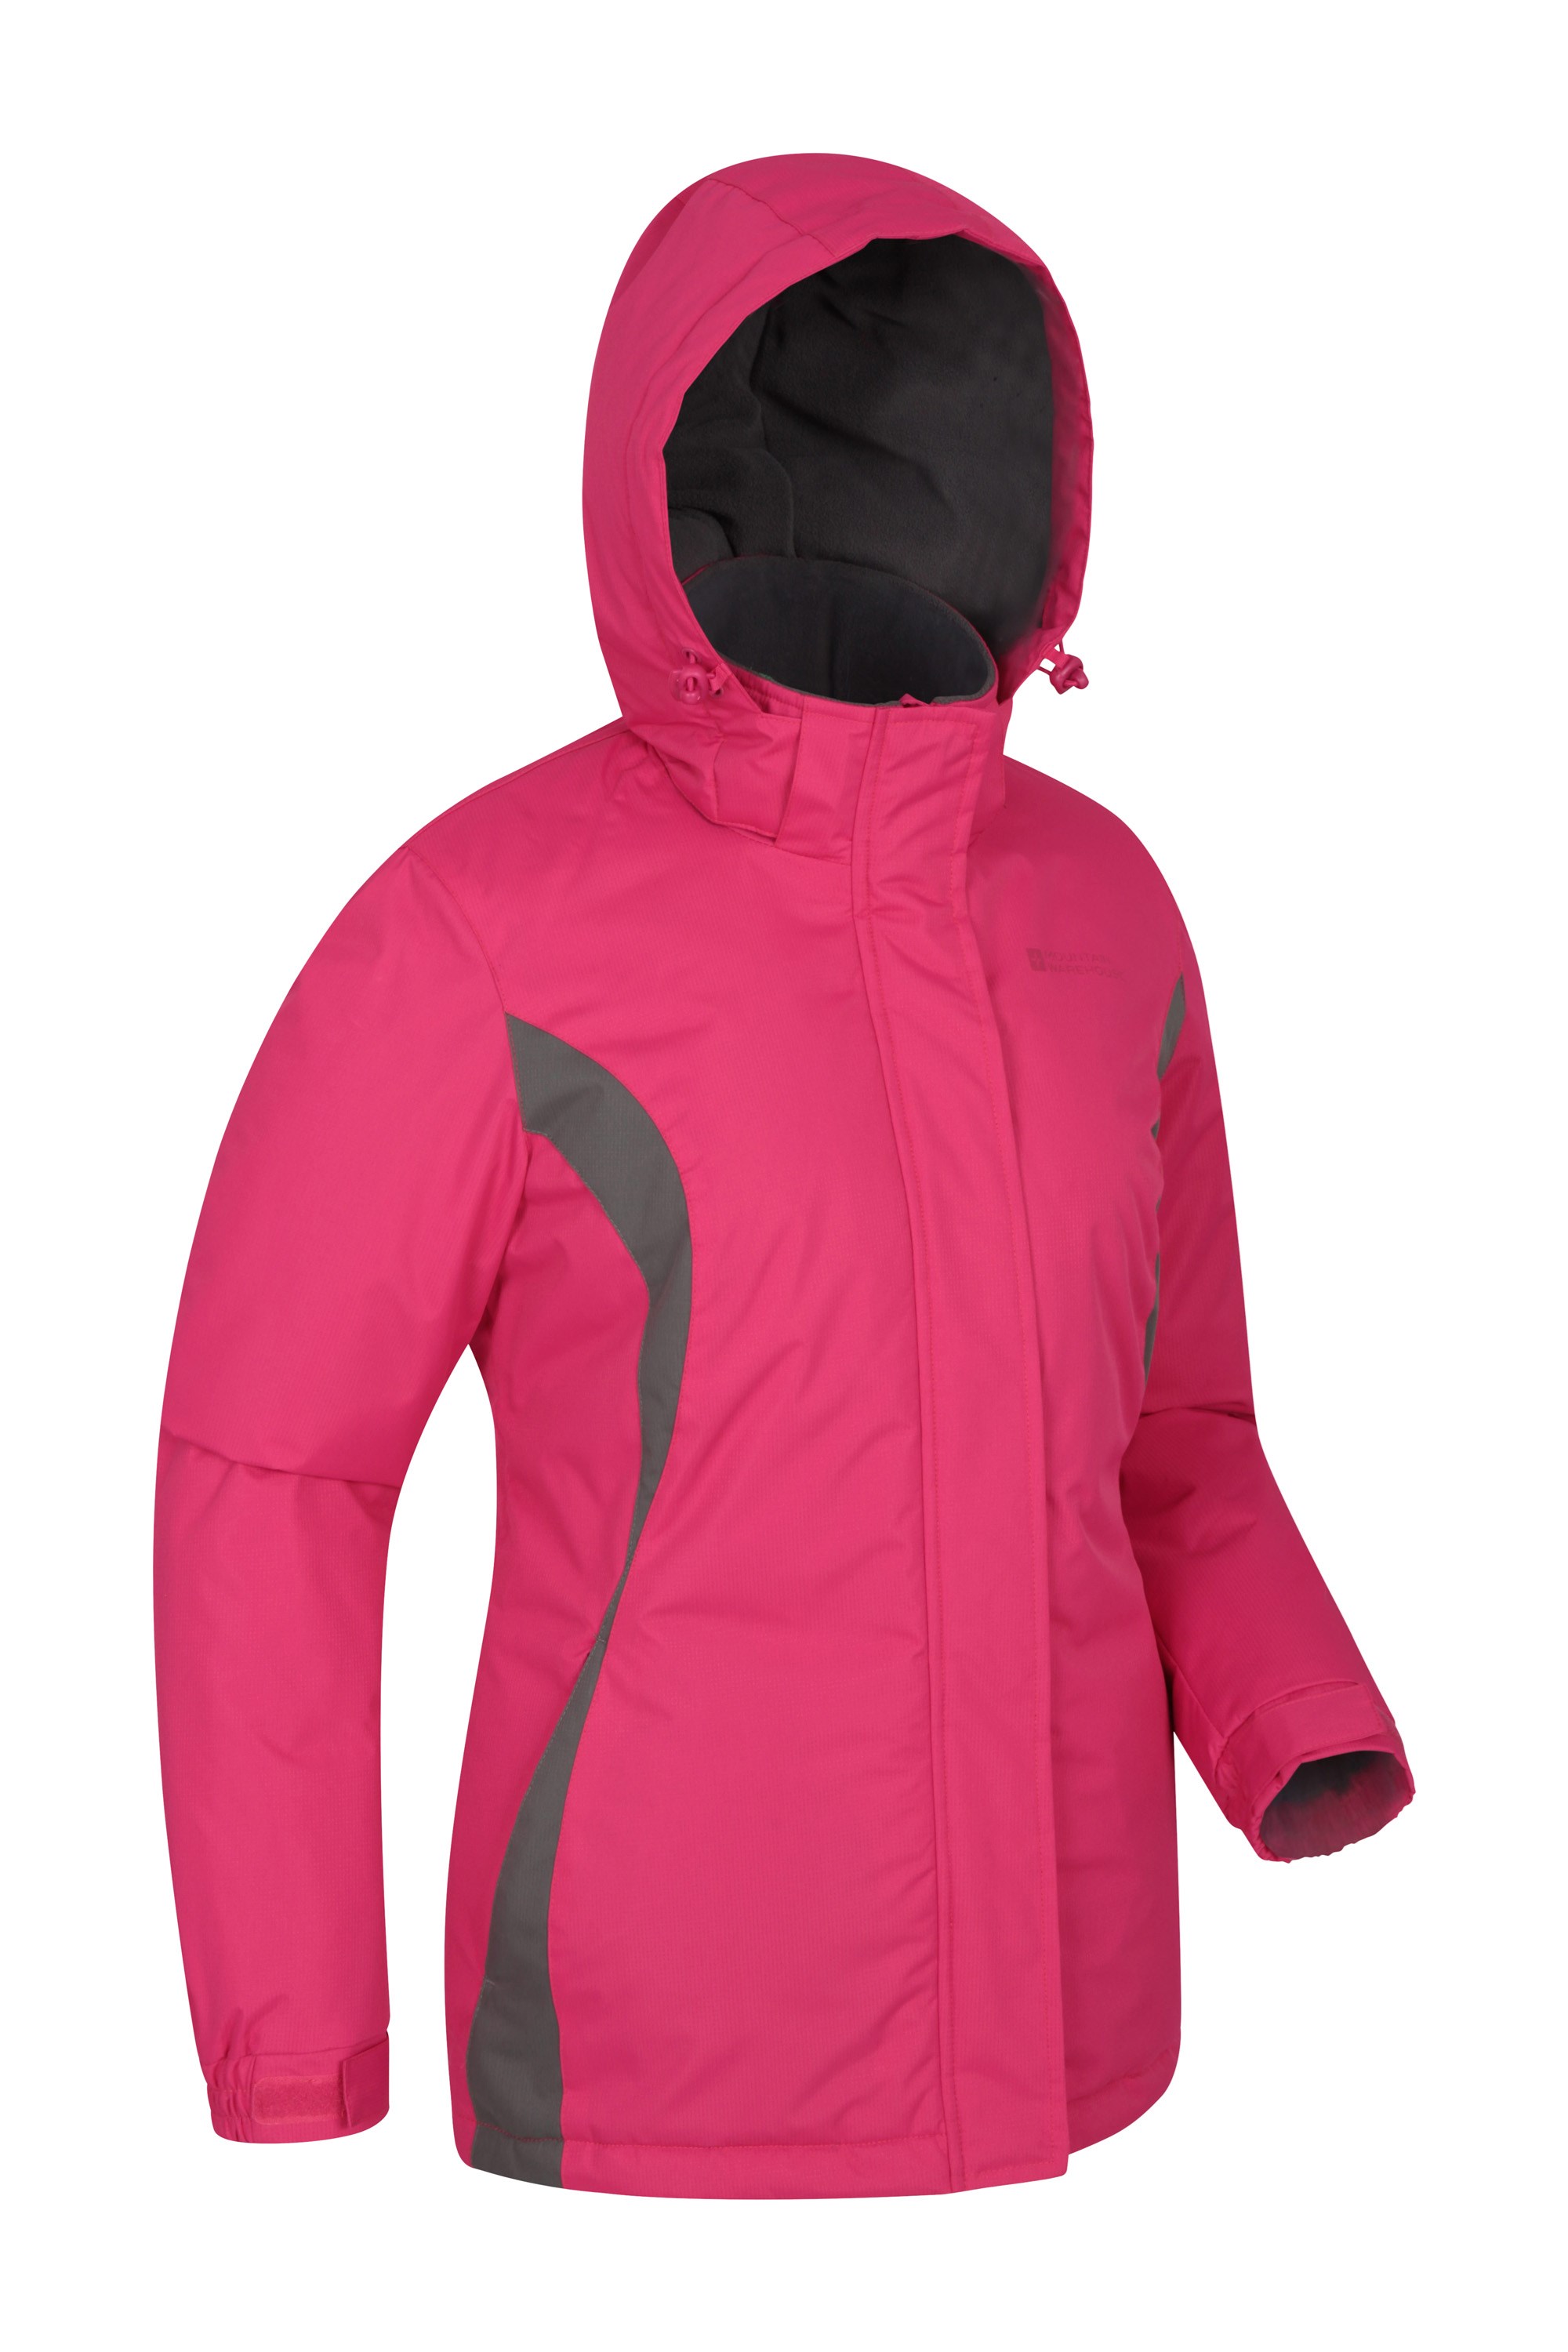 Womens Mountain Warehouse Moon Ski Jacket Bright Pink Size Uk 10 Bnwt Rrp 79.99 